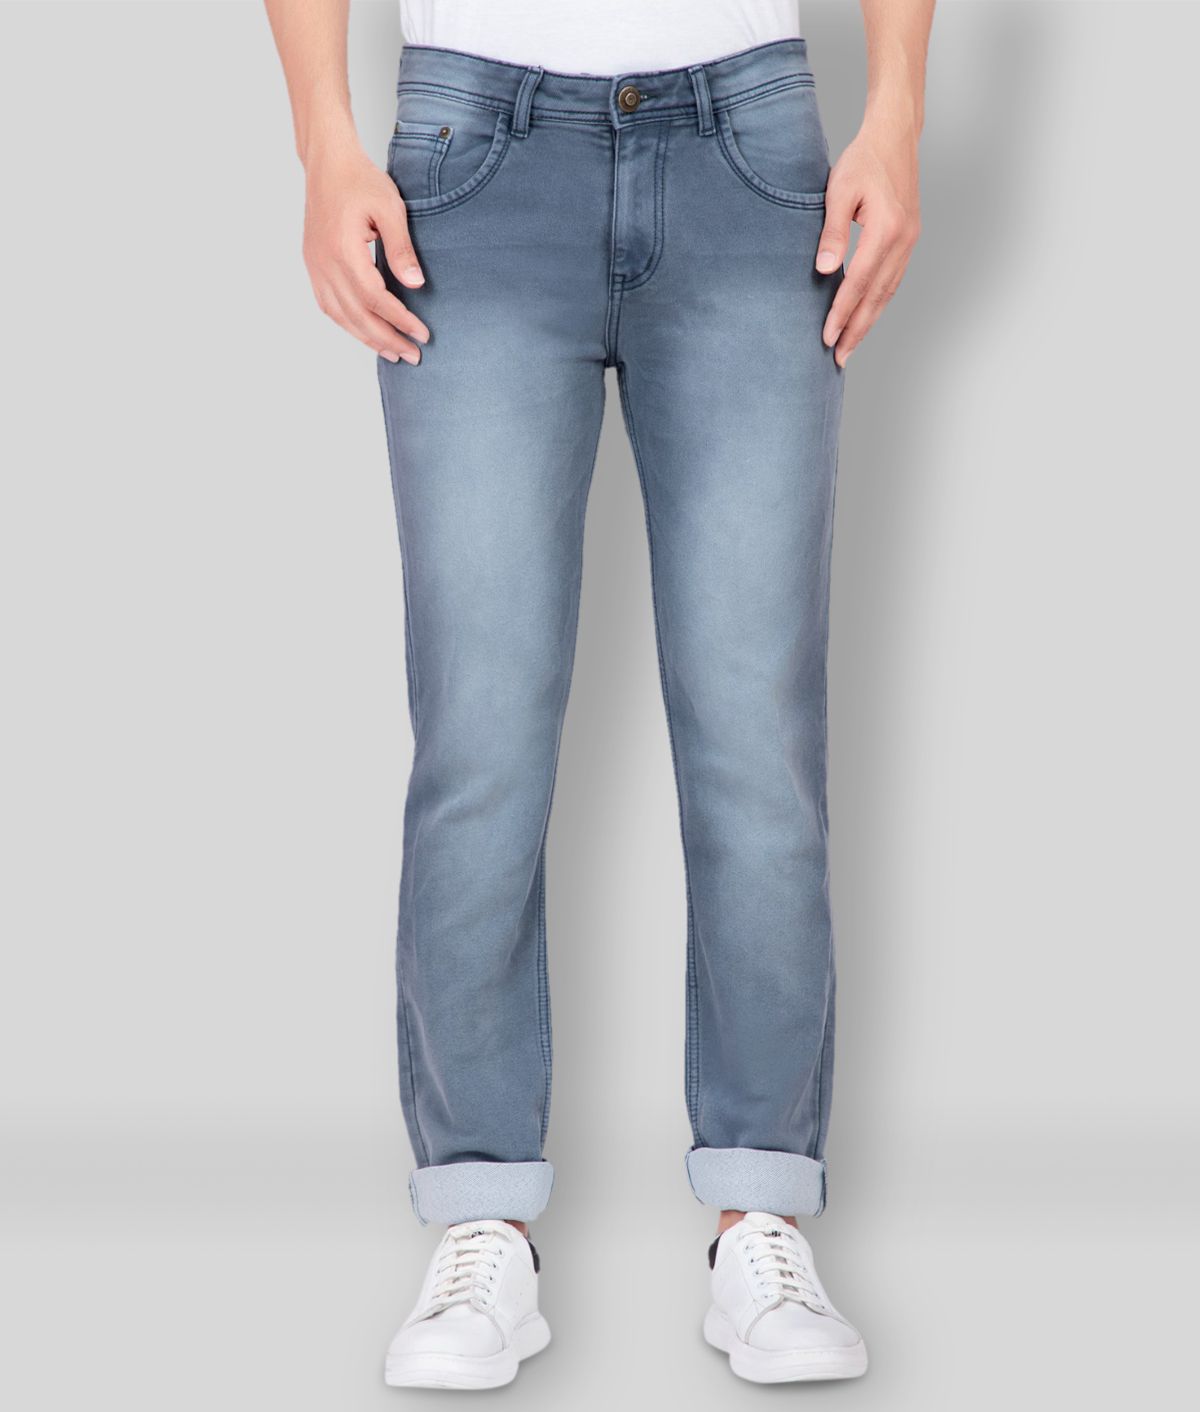 HJ HASASI - Grey 100% Cotton Regular Fit Men's Jeans ( Pack of 1 )